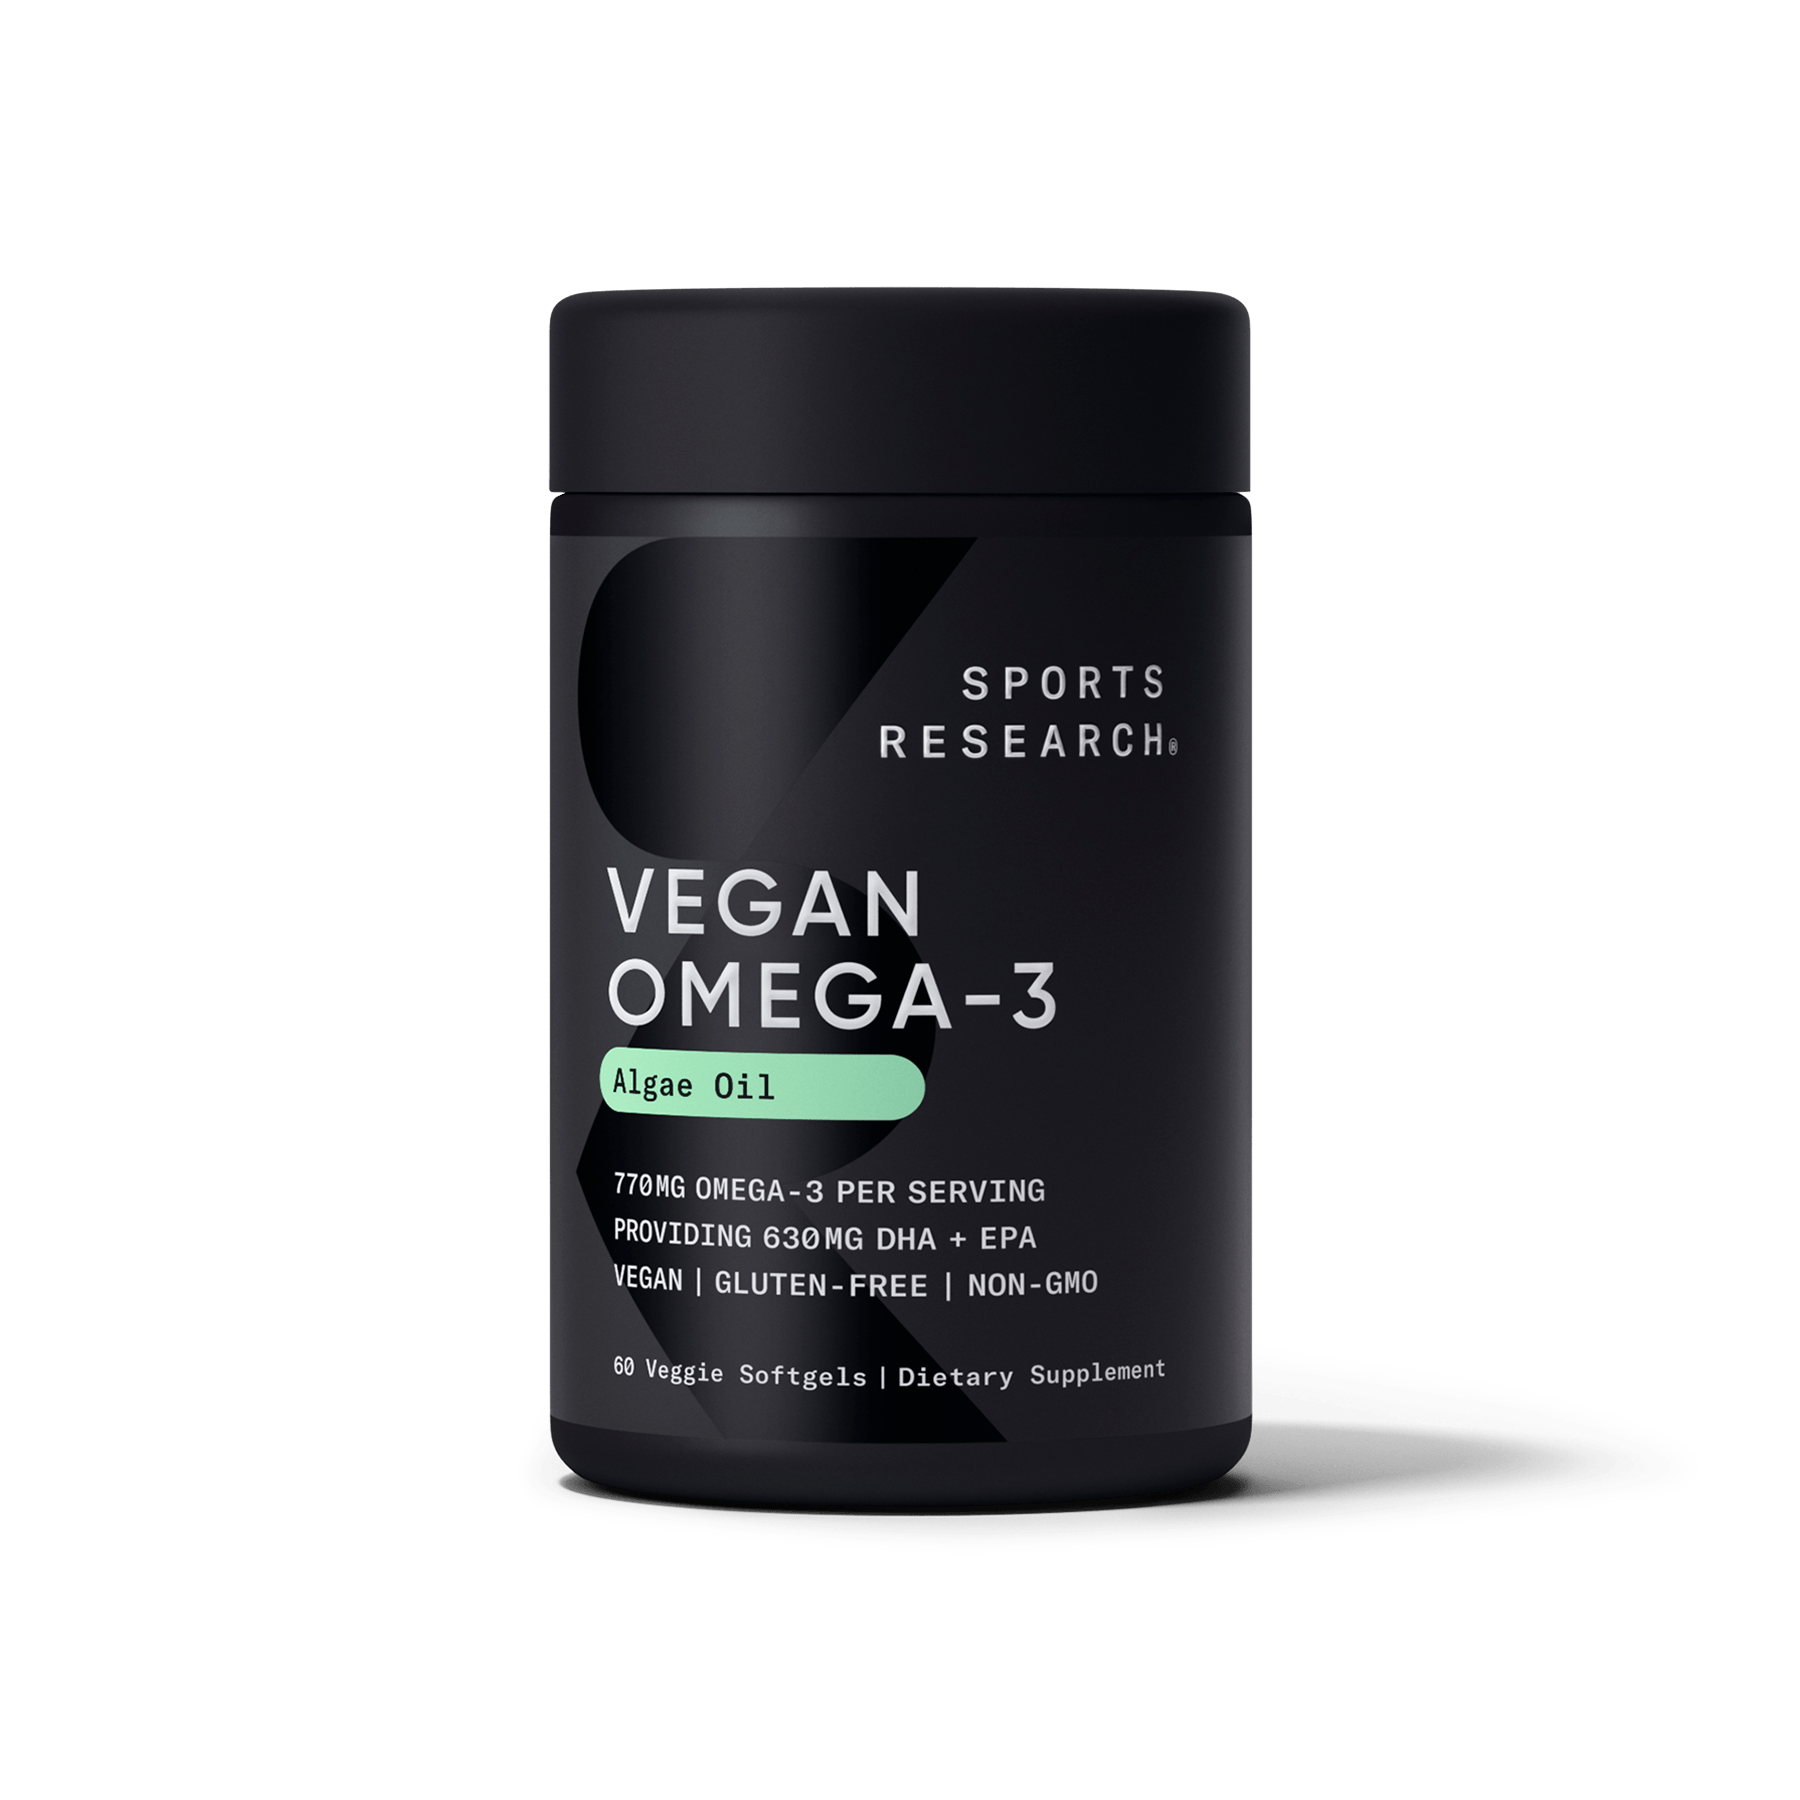 Sports Research Vegan Omega-3 from Algae Oil.